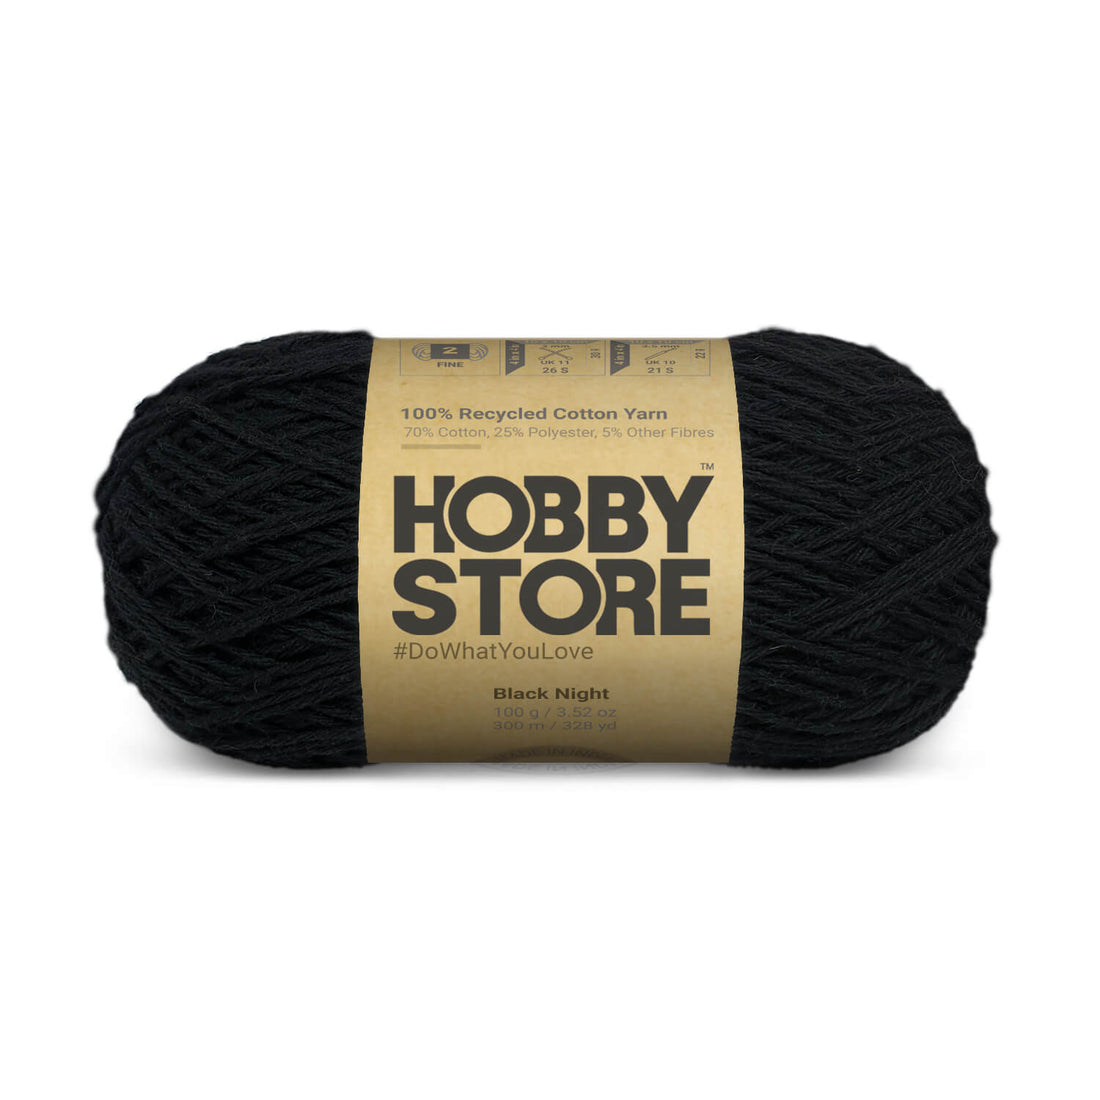 Hobby Store Recycled Cotton Yarn - Black Night 8413